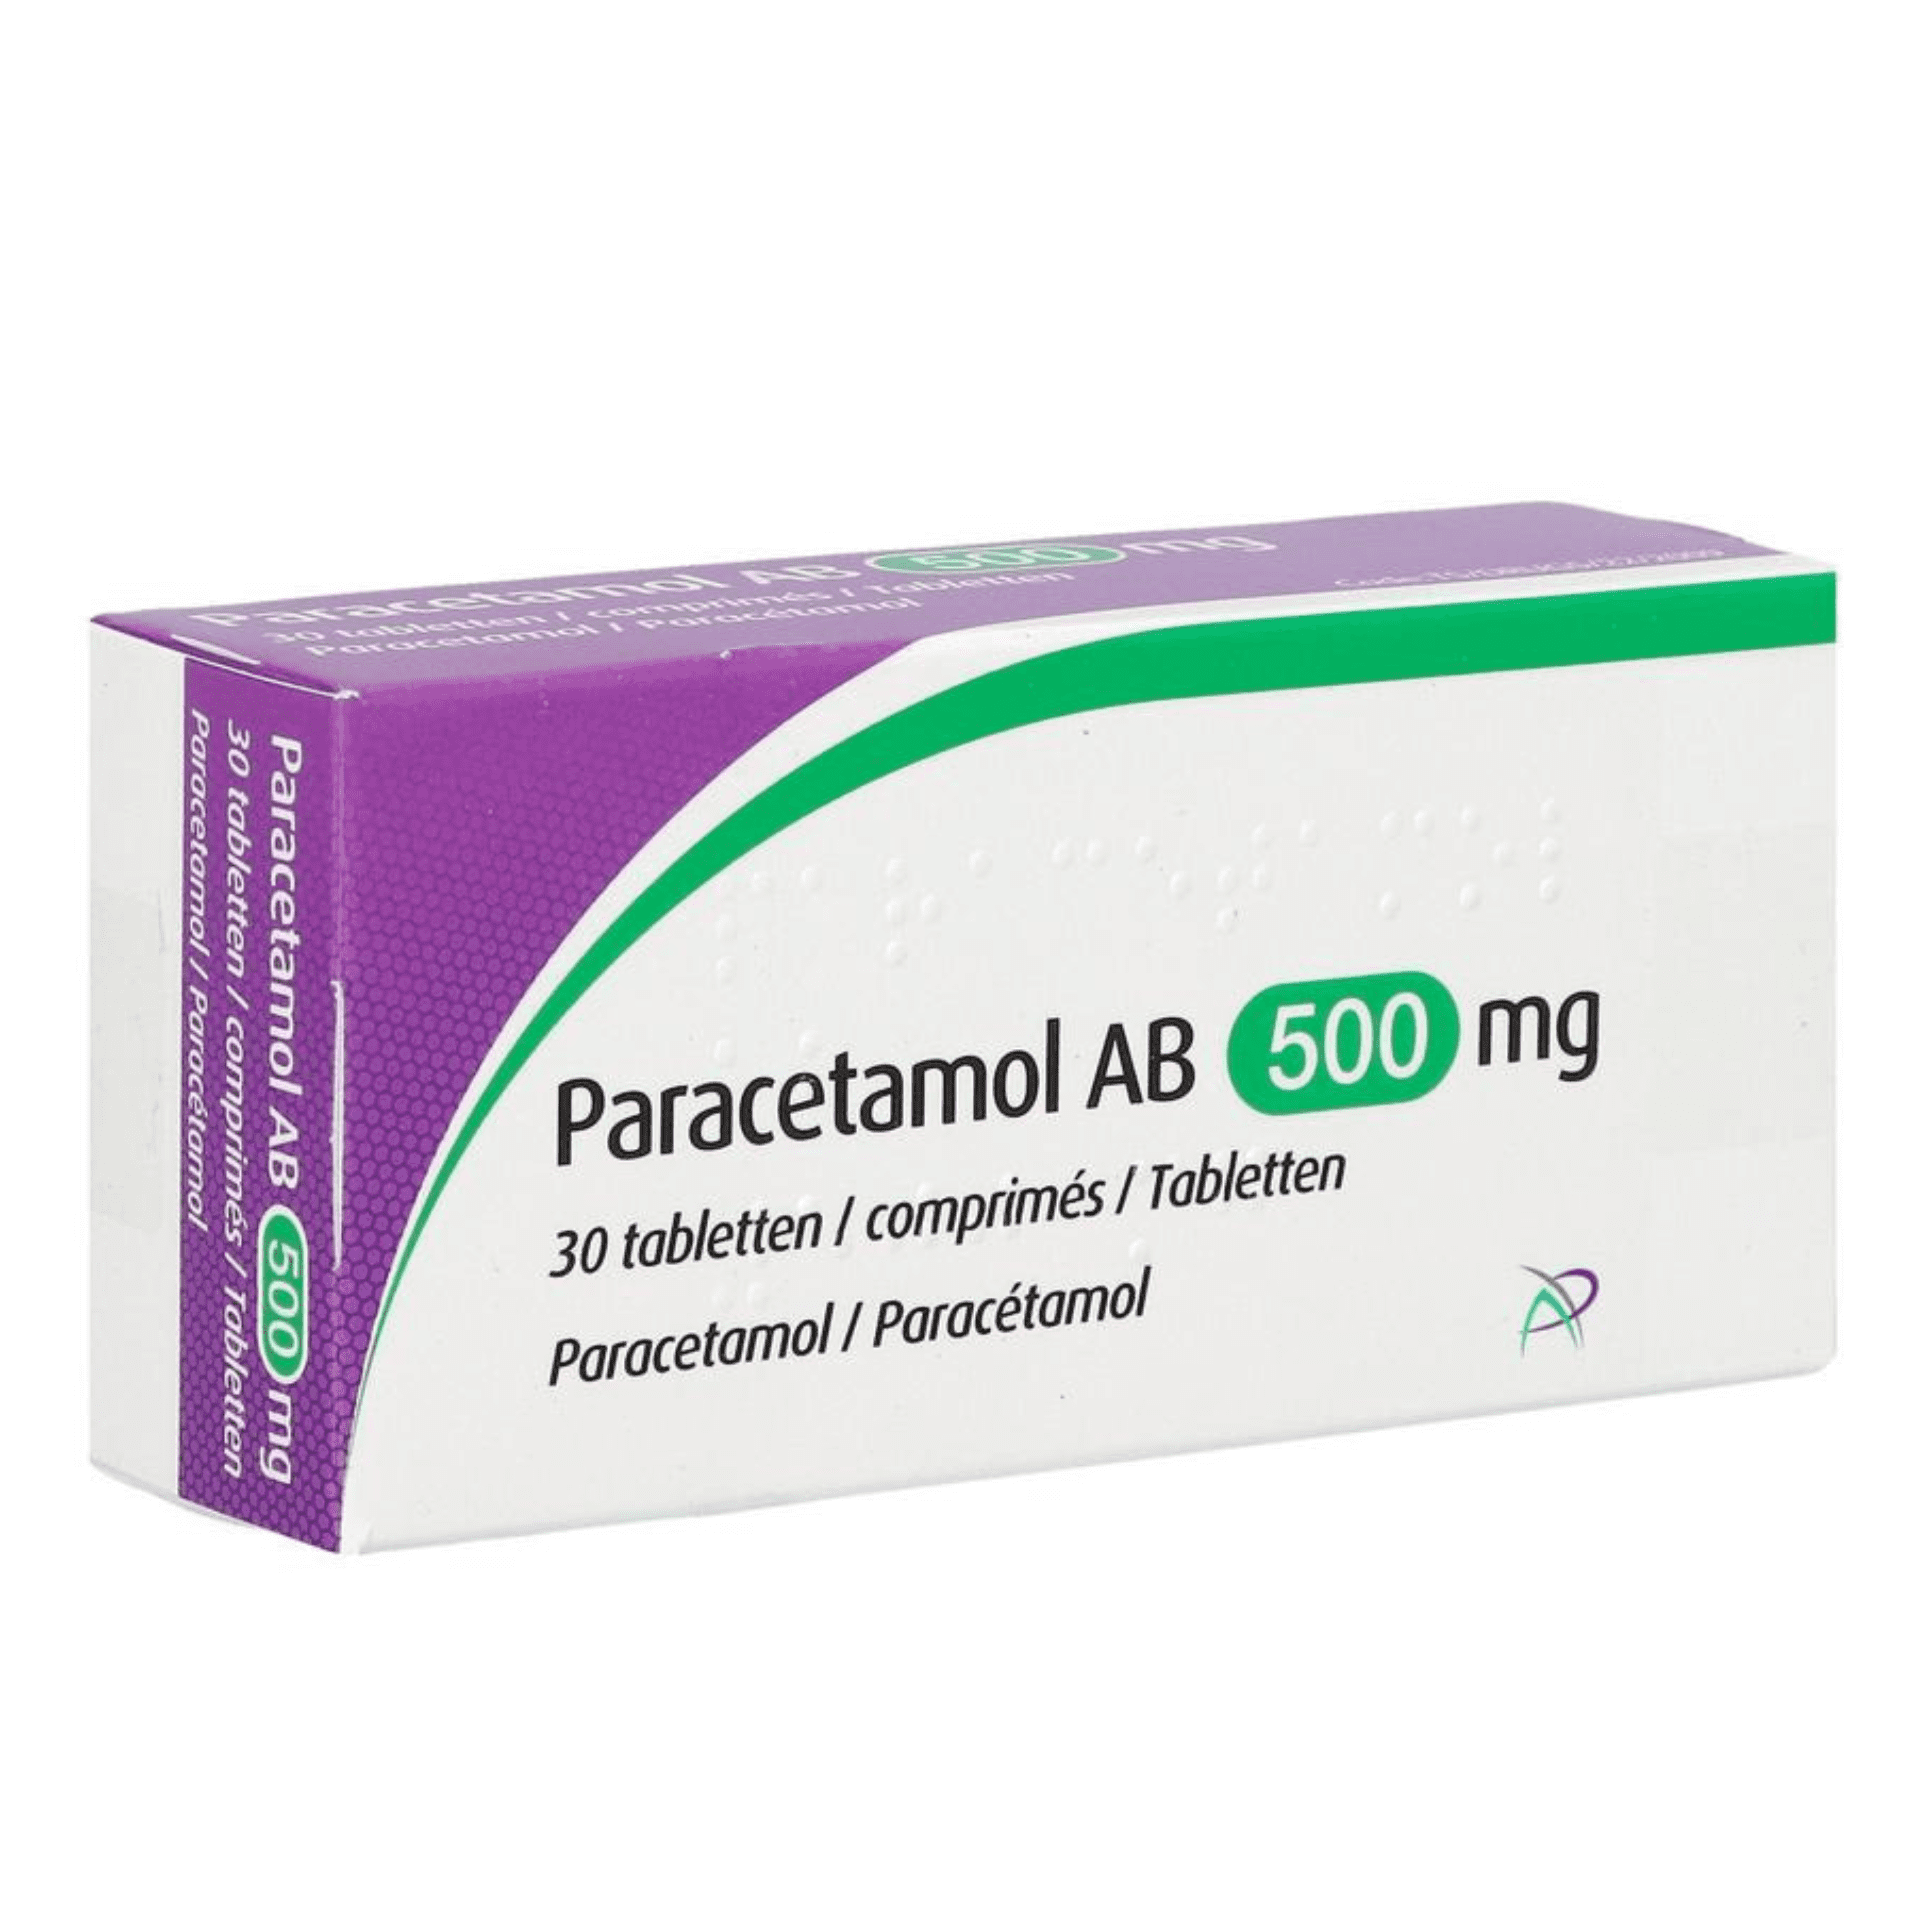 Paracetamol Ab 500 mg 